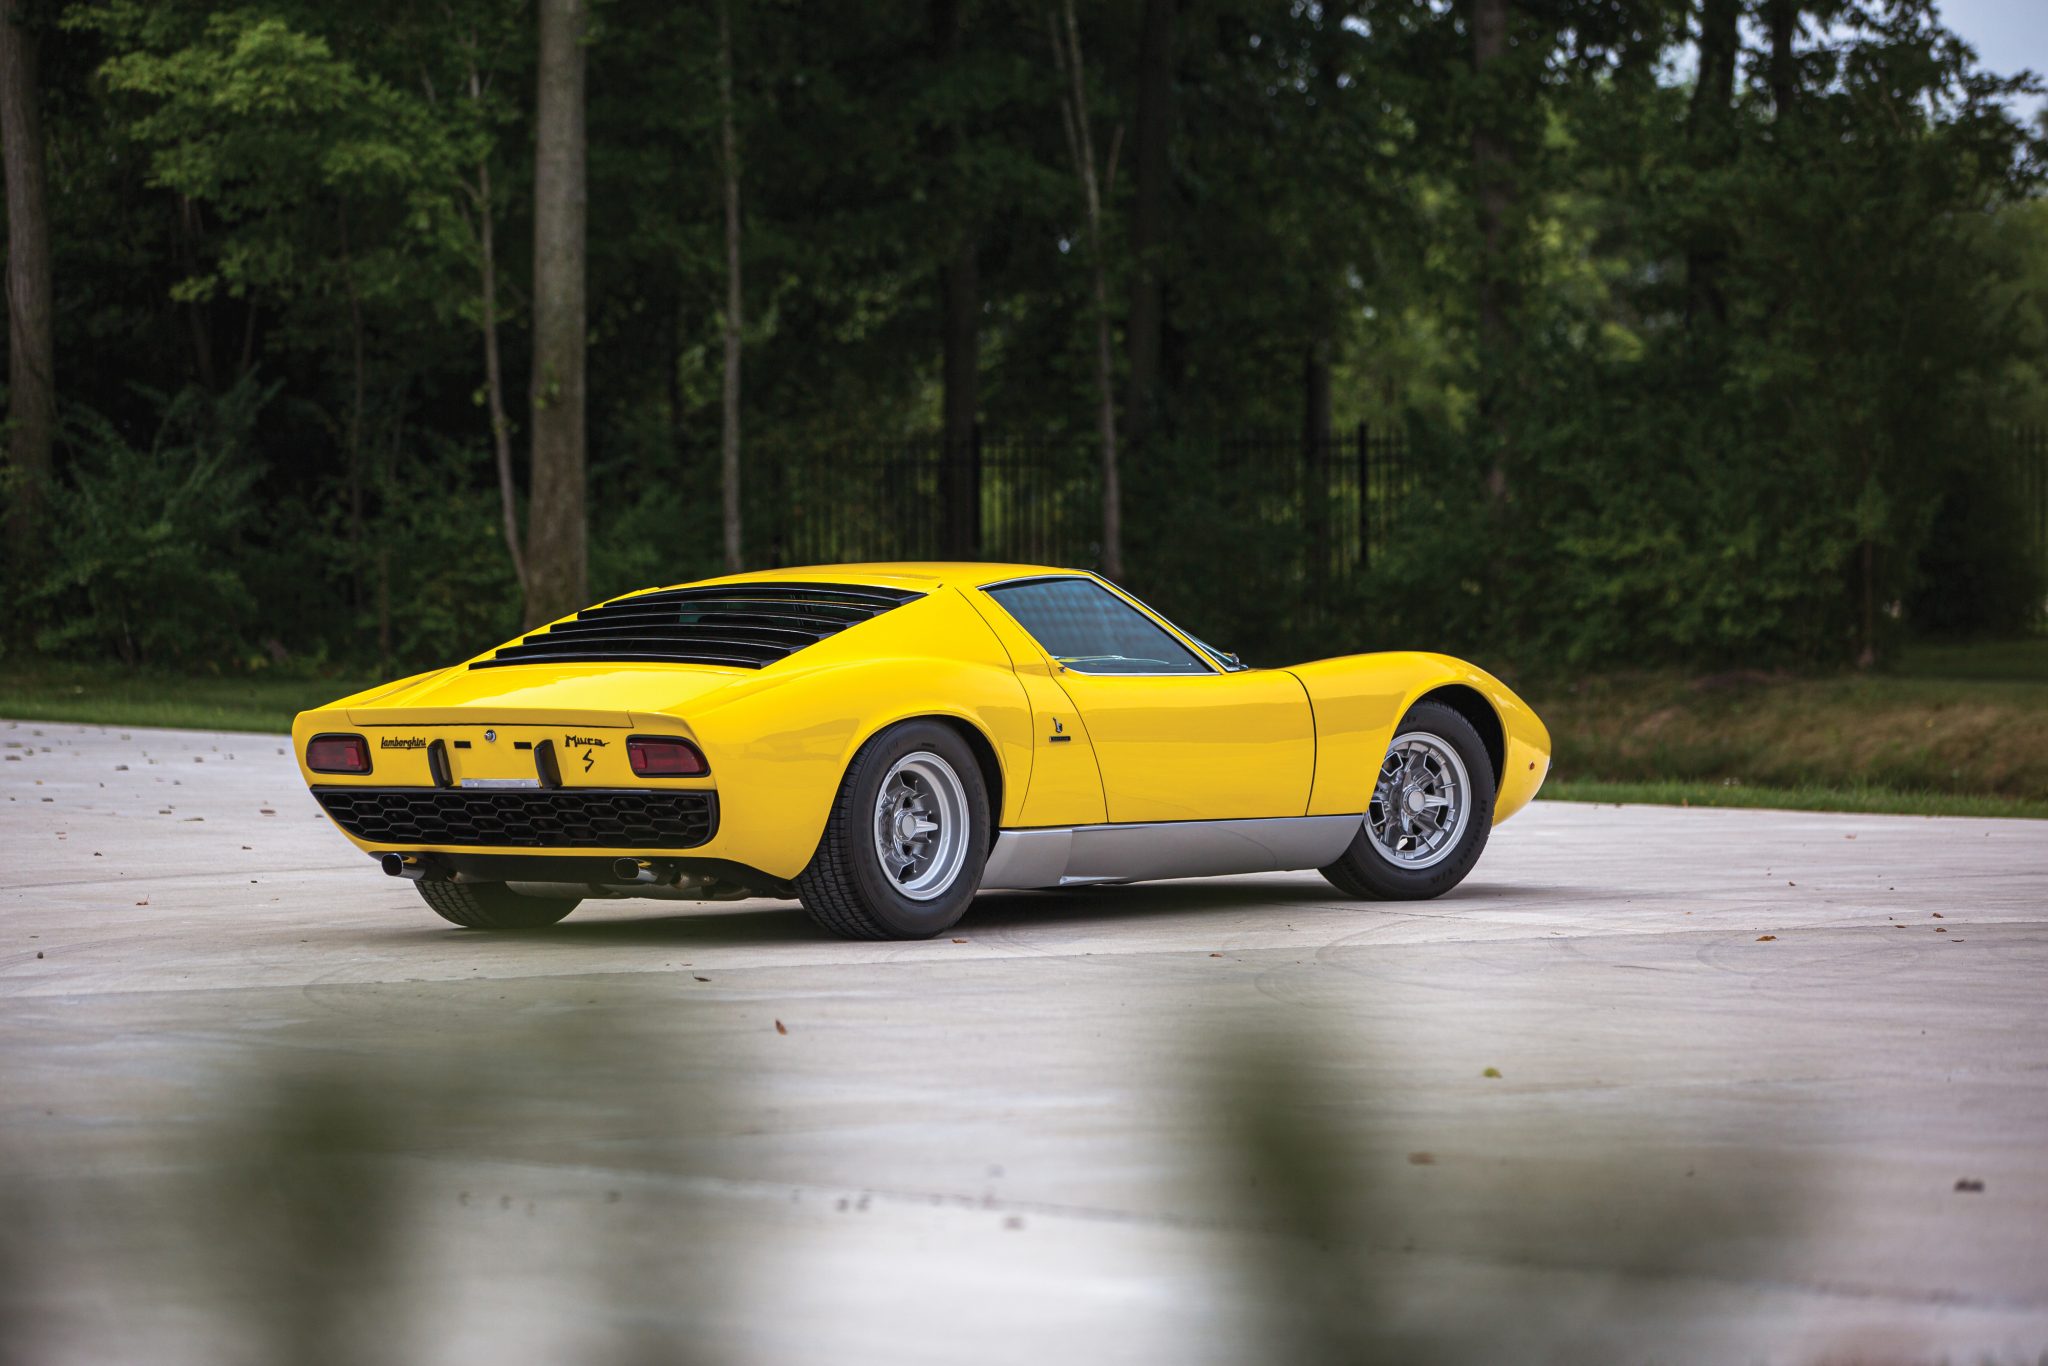  1969 Lamborghini Miura P400 S by Bertone ©2019 Courtesy of RM Sotheby's